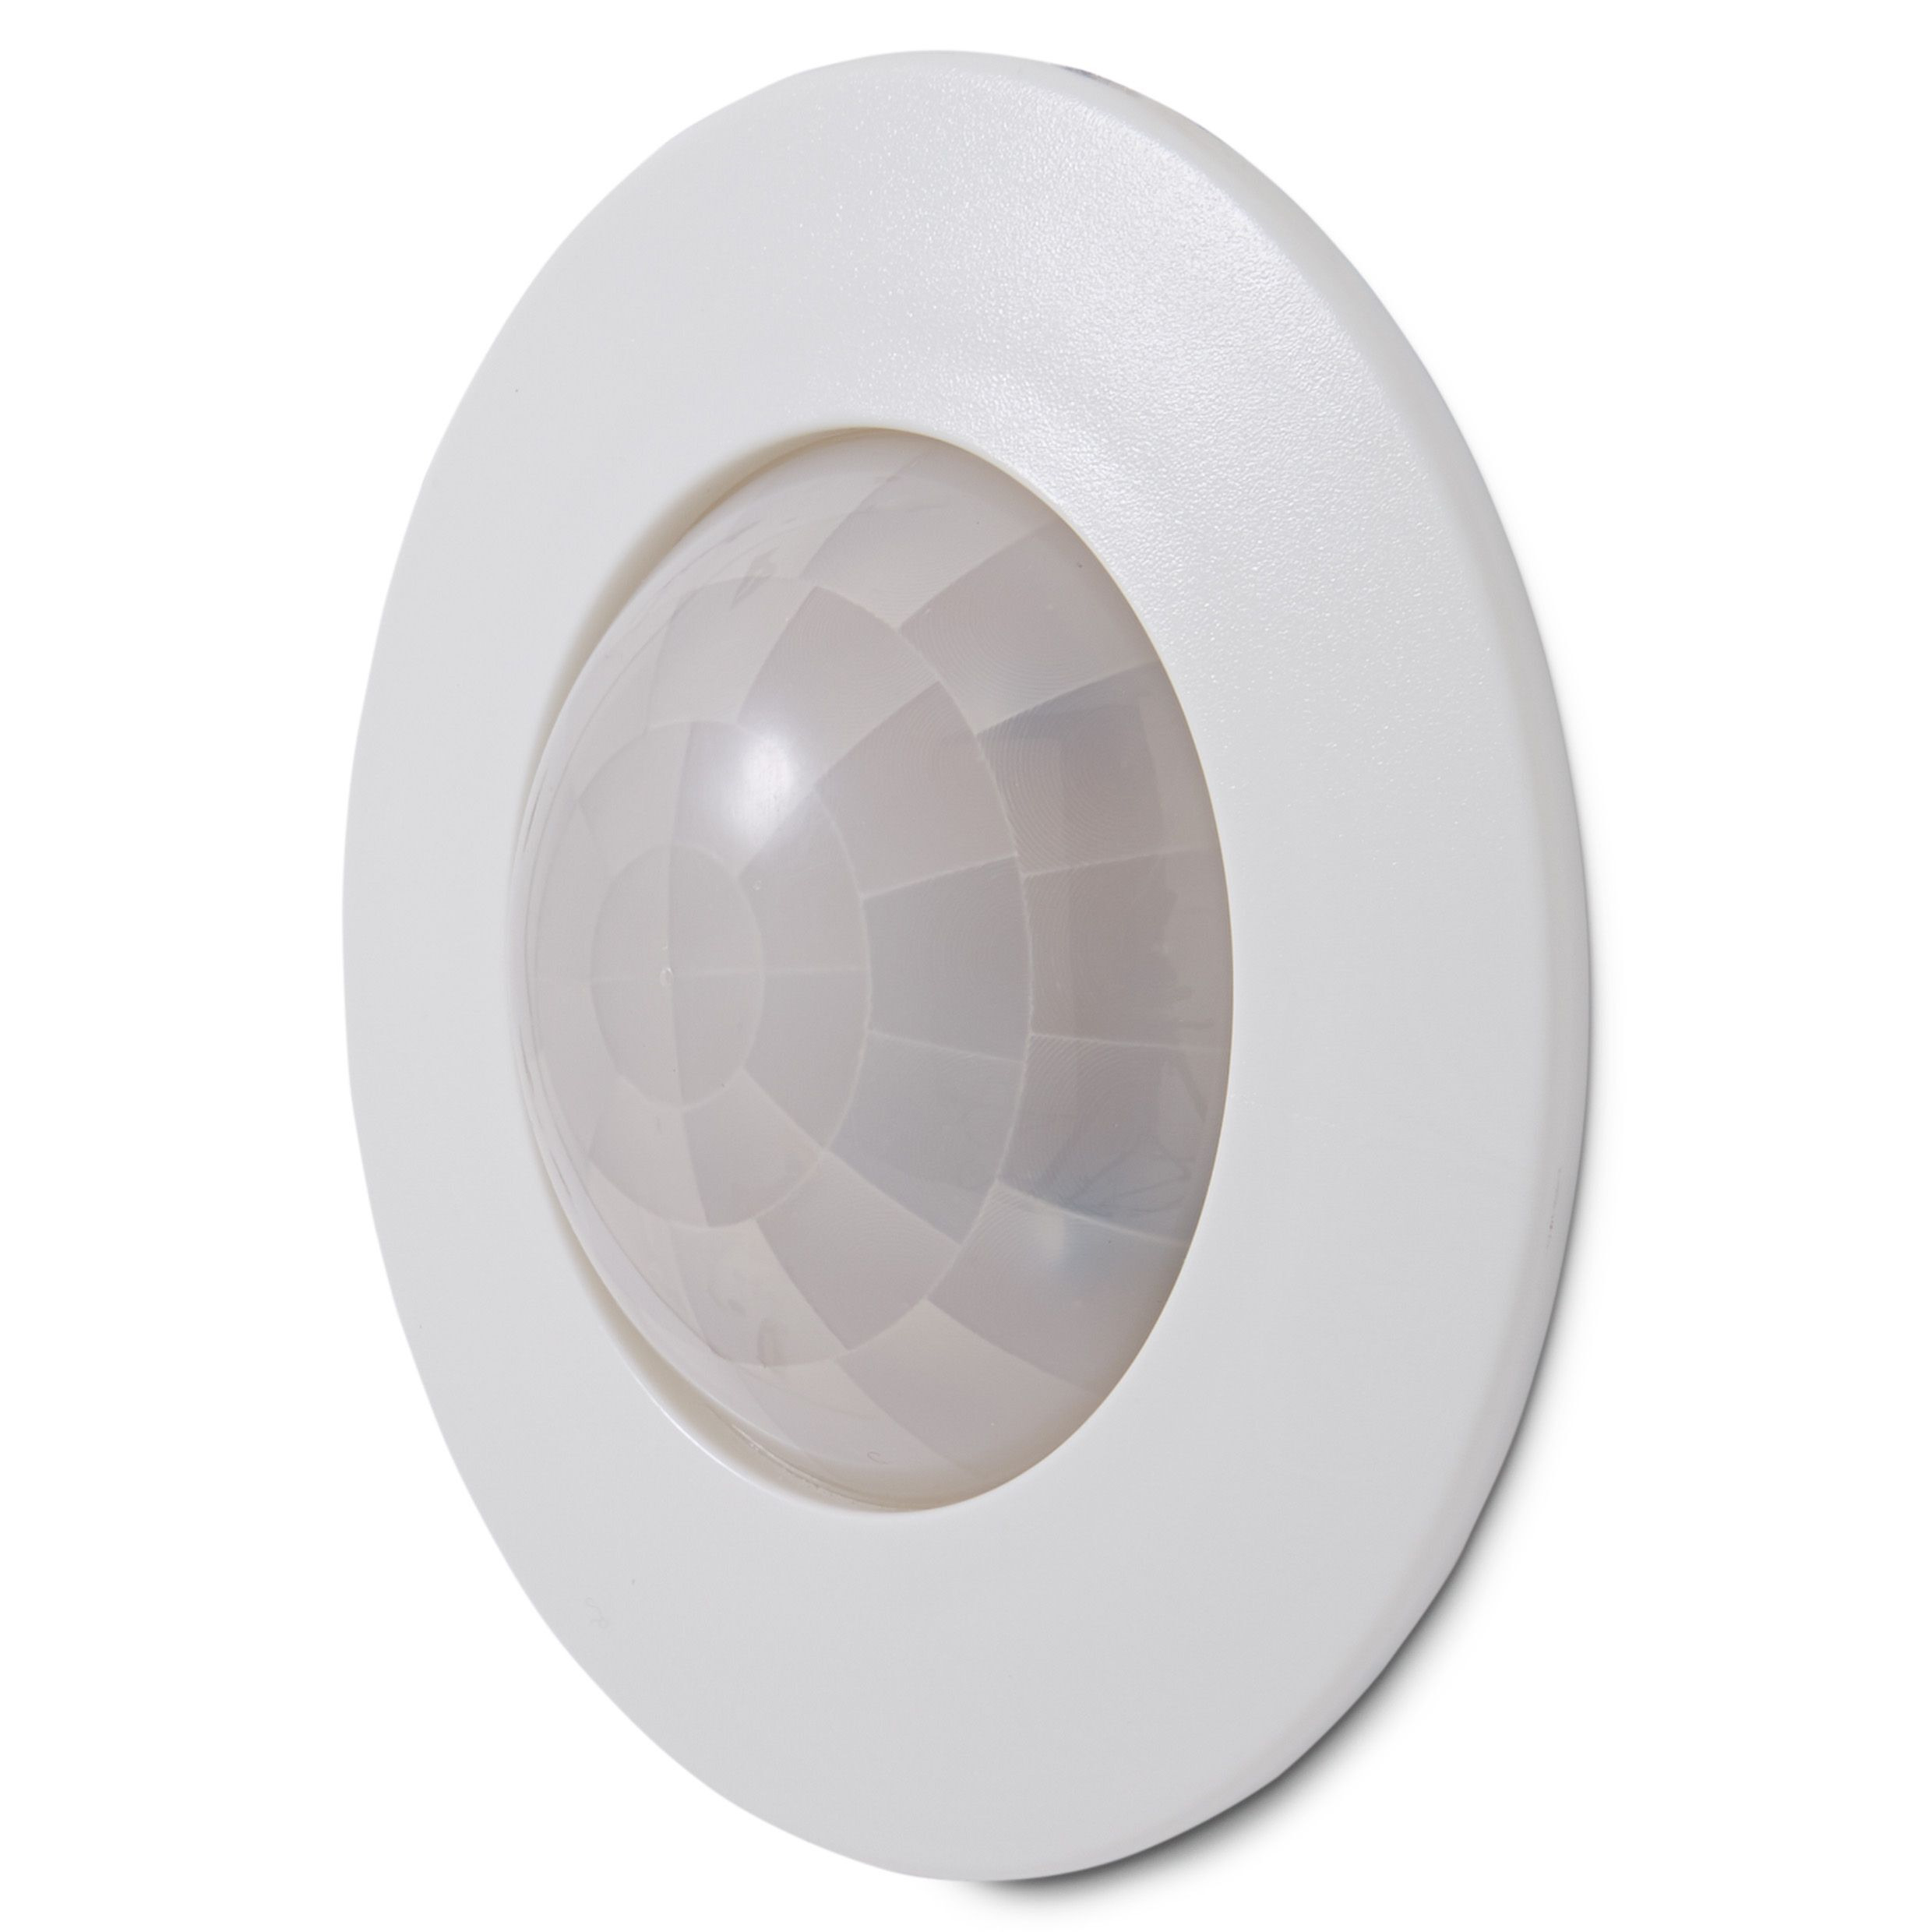 Blooma Malartic White Mains-Powered Wall Lighting Pir Motion Sensor